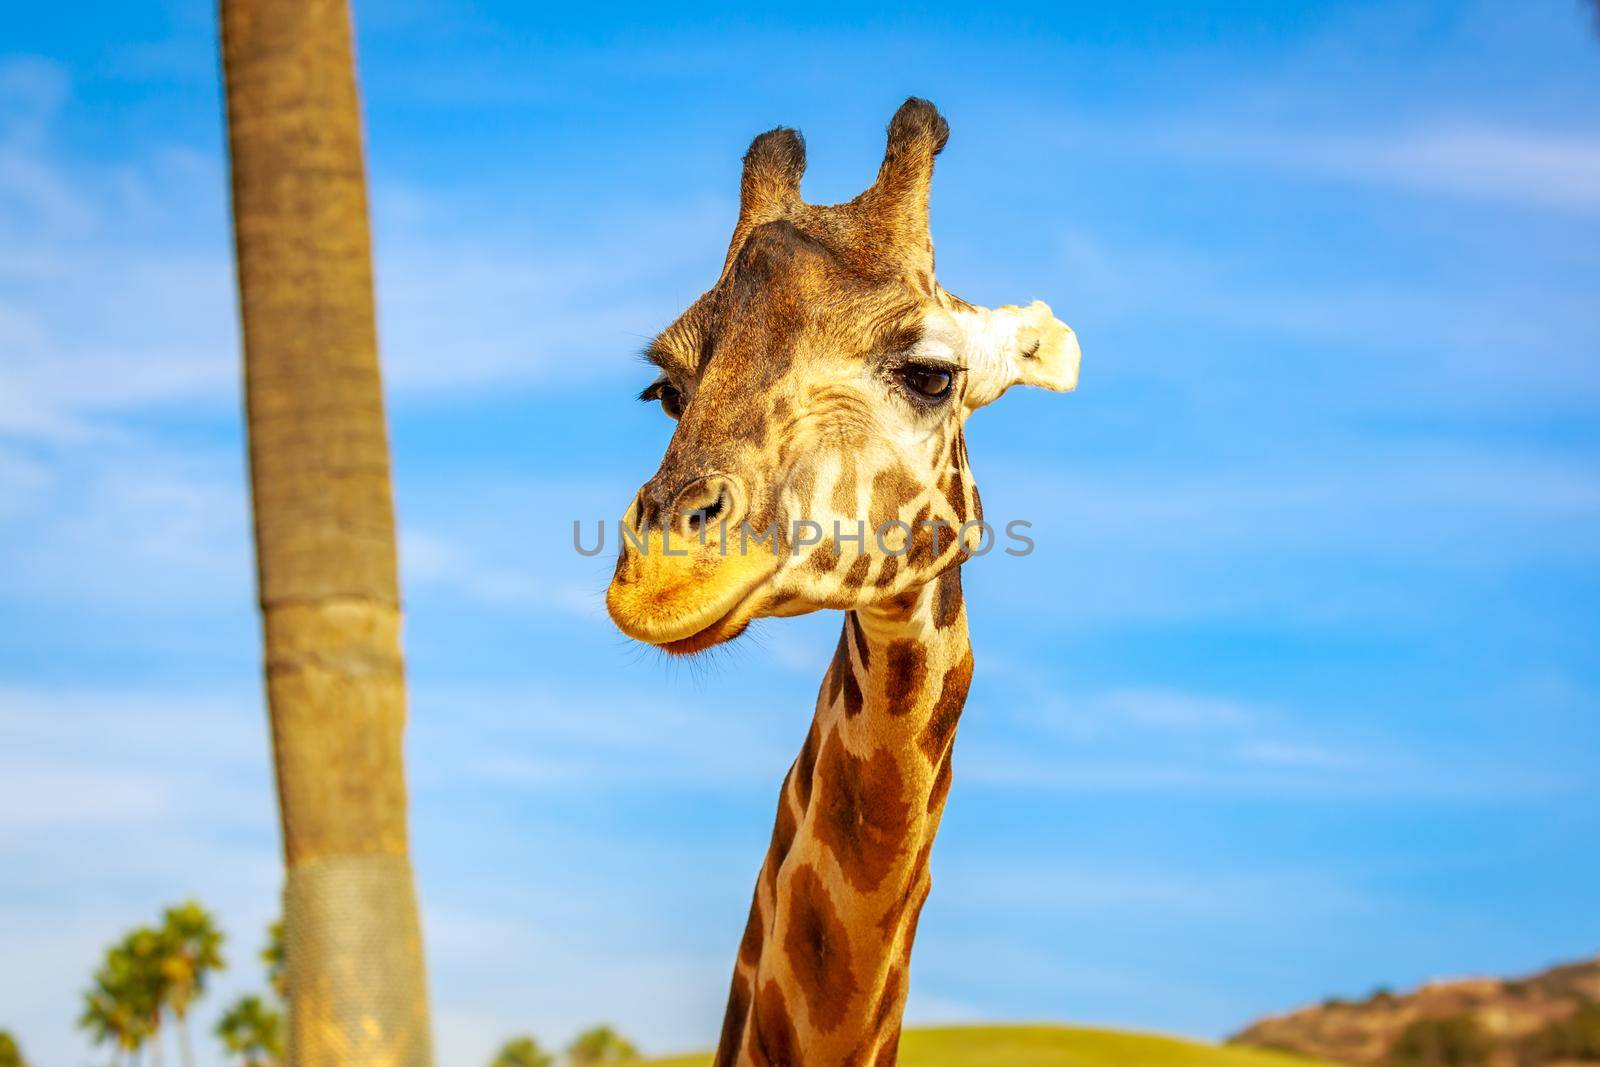 Close-up portrait of Giraffe headshot and its upper neck